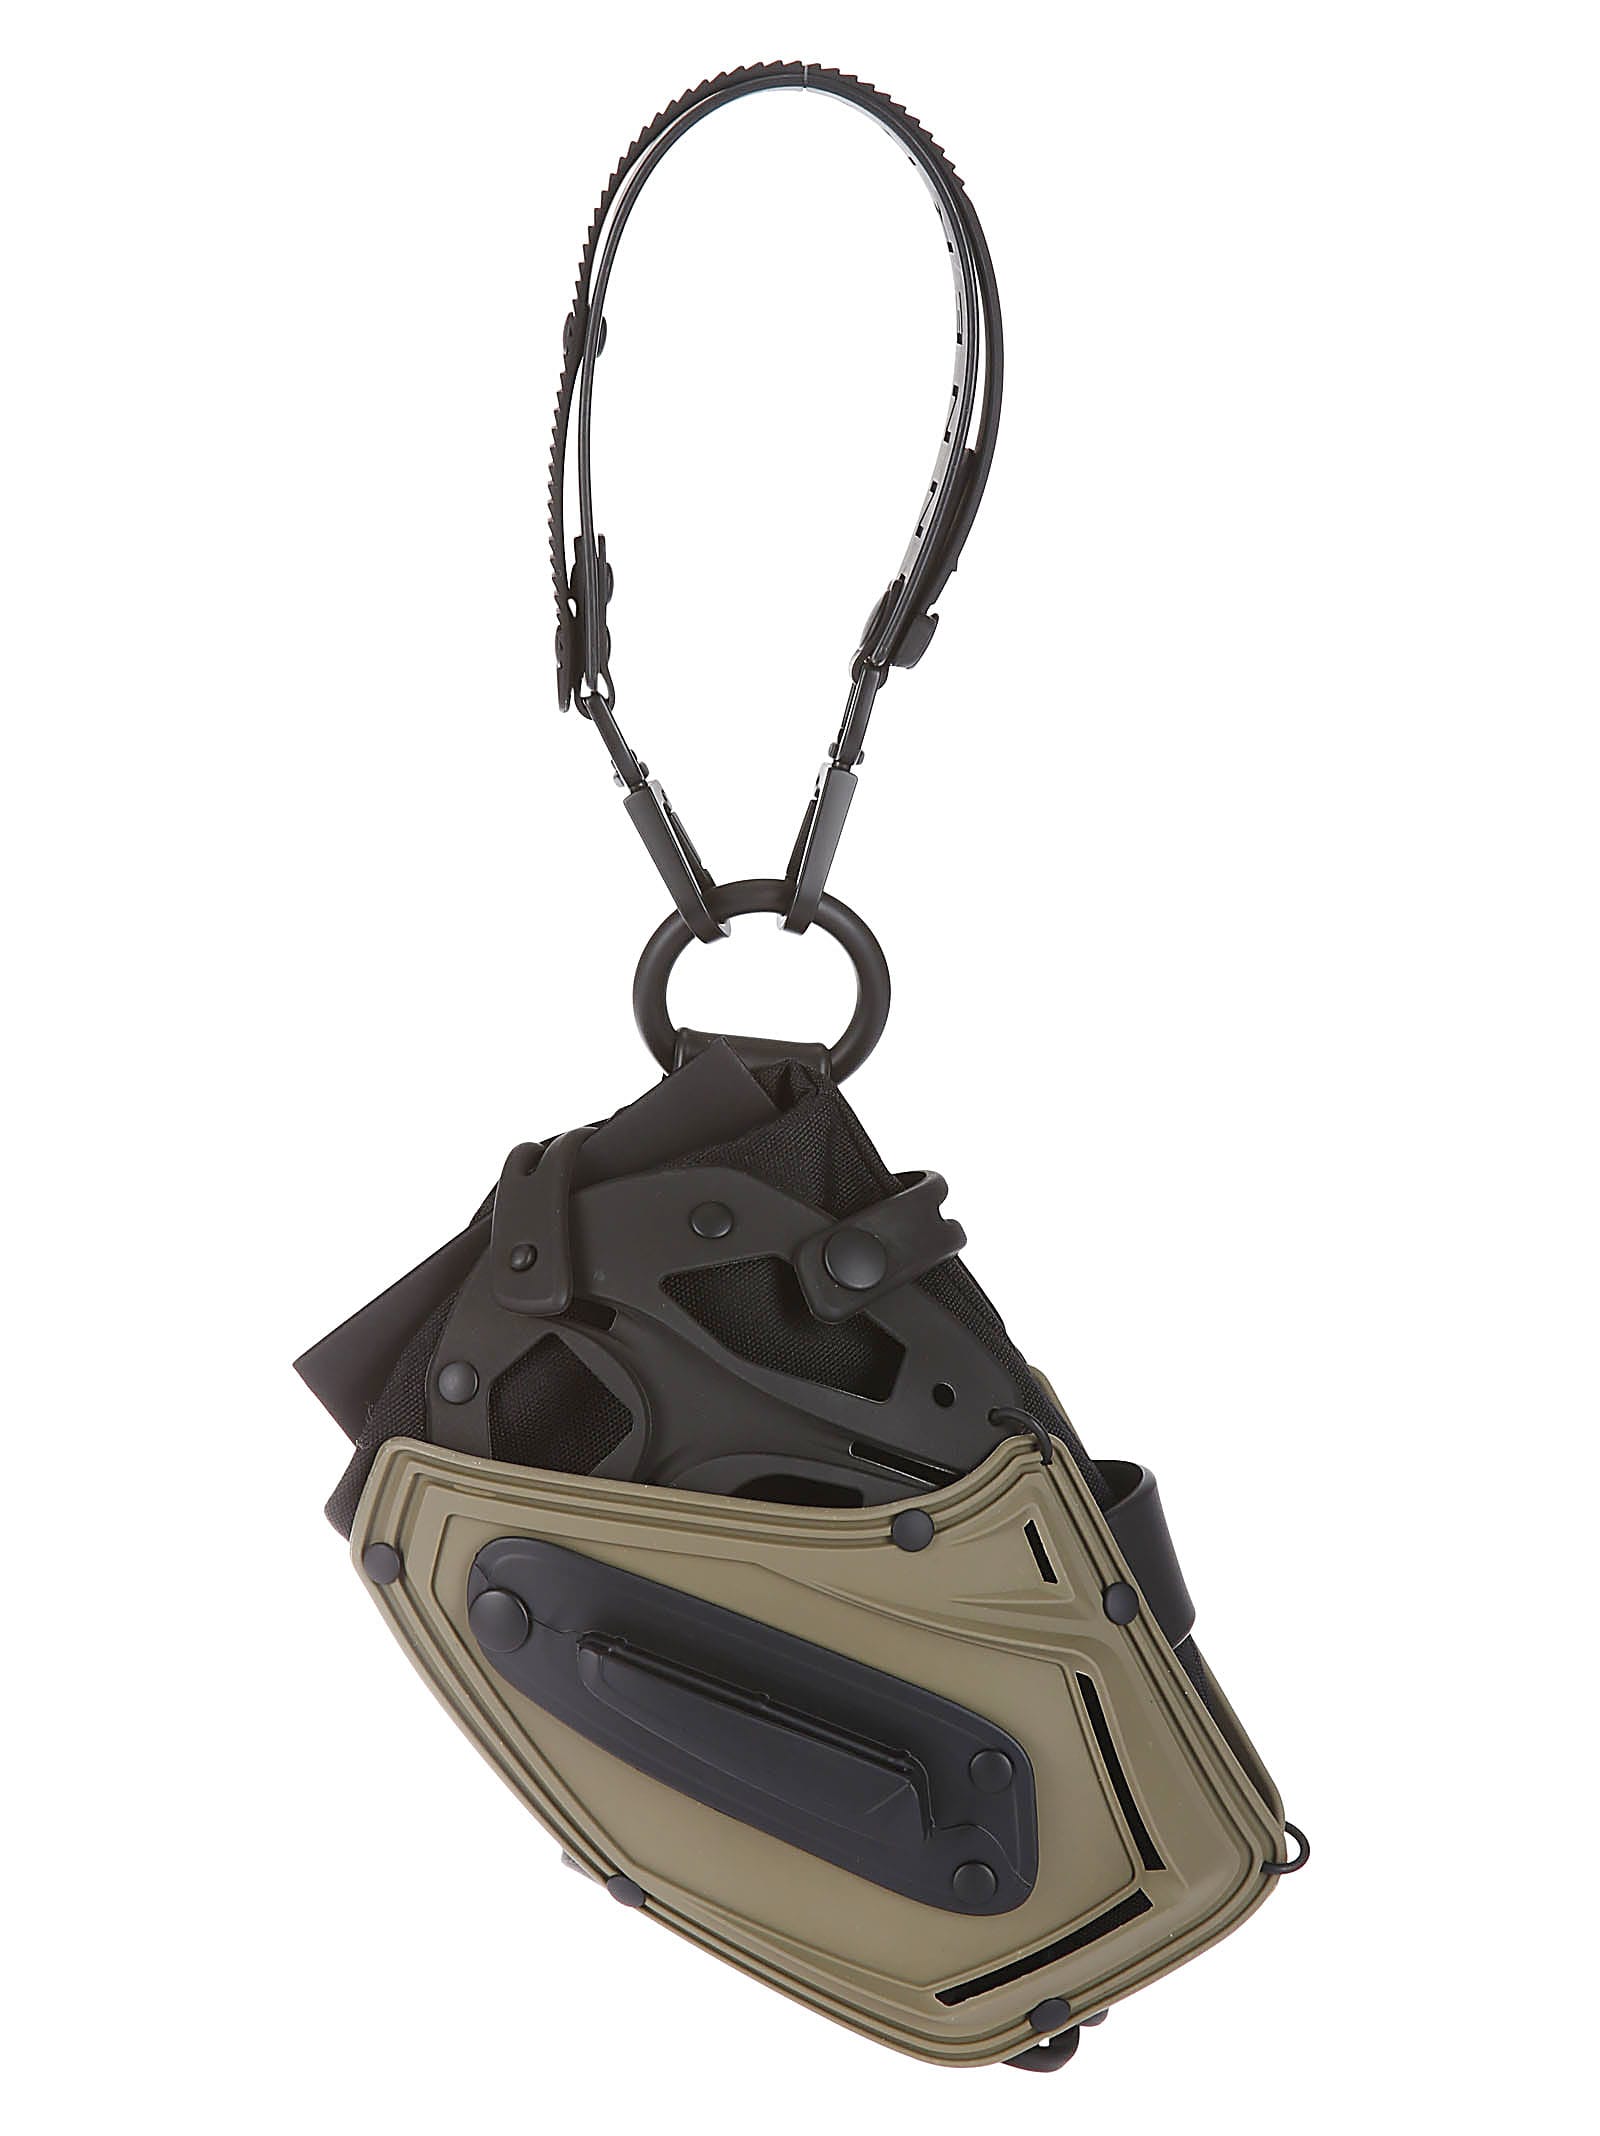 Innerraum Object I51 Wristlet Phone Bag In Recycledgreen